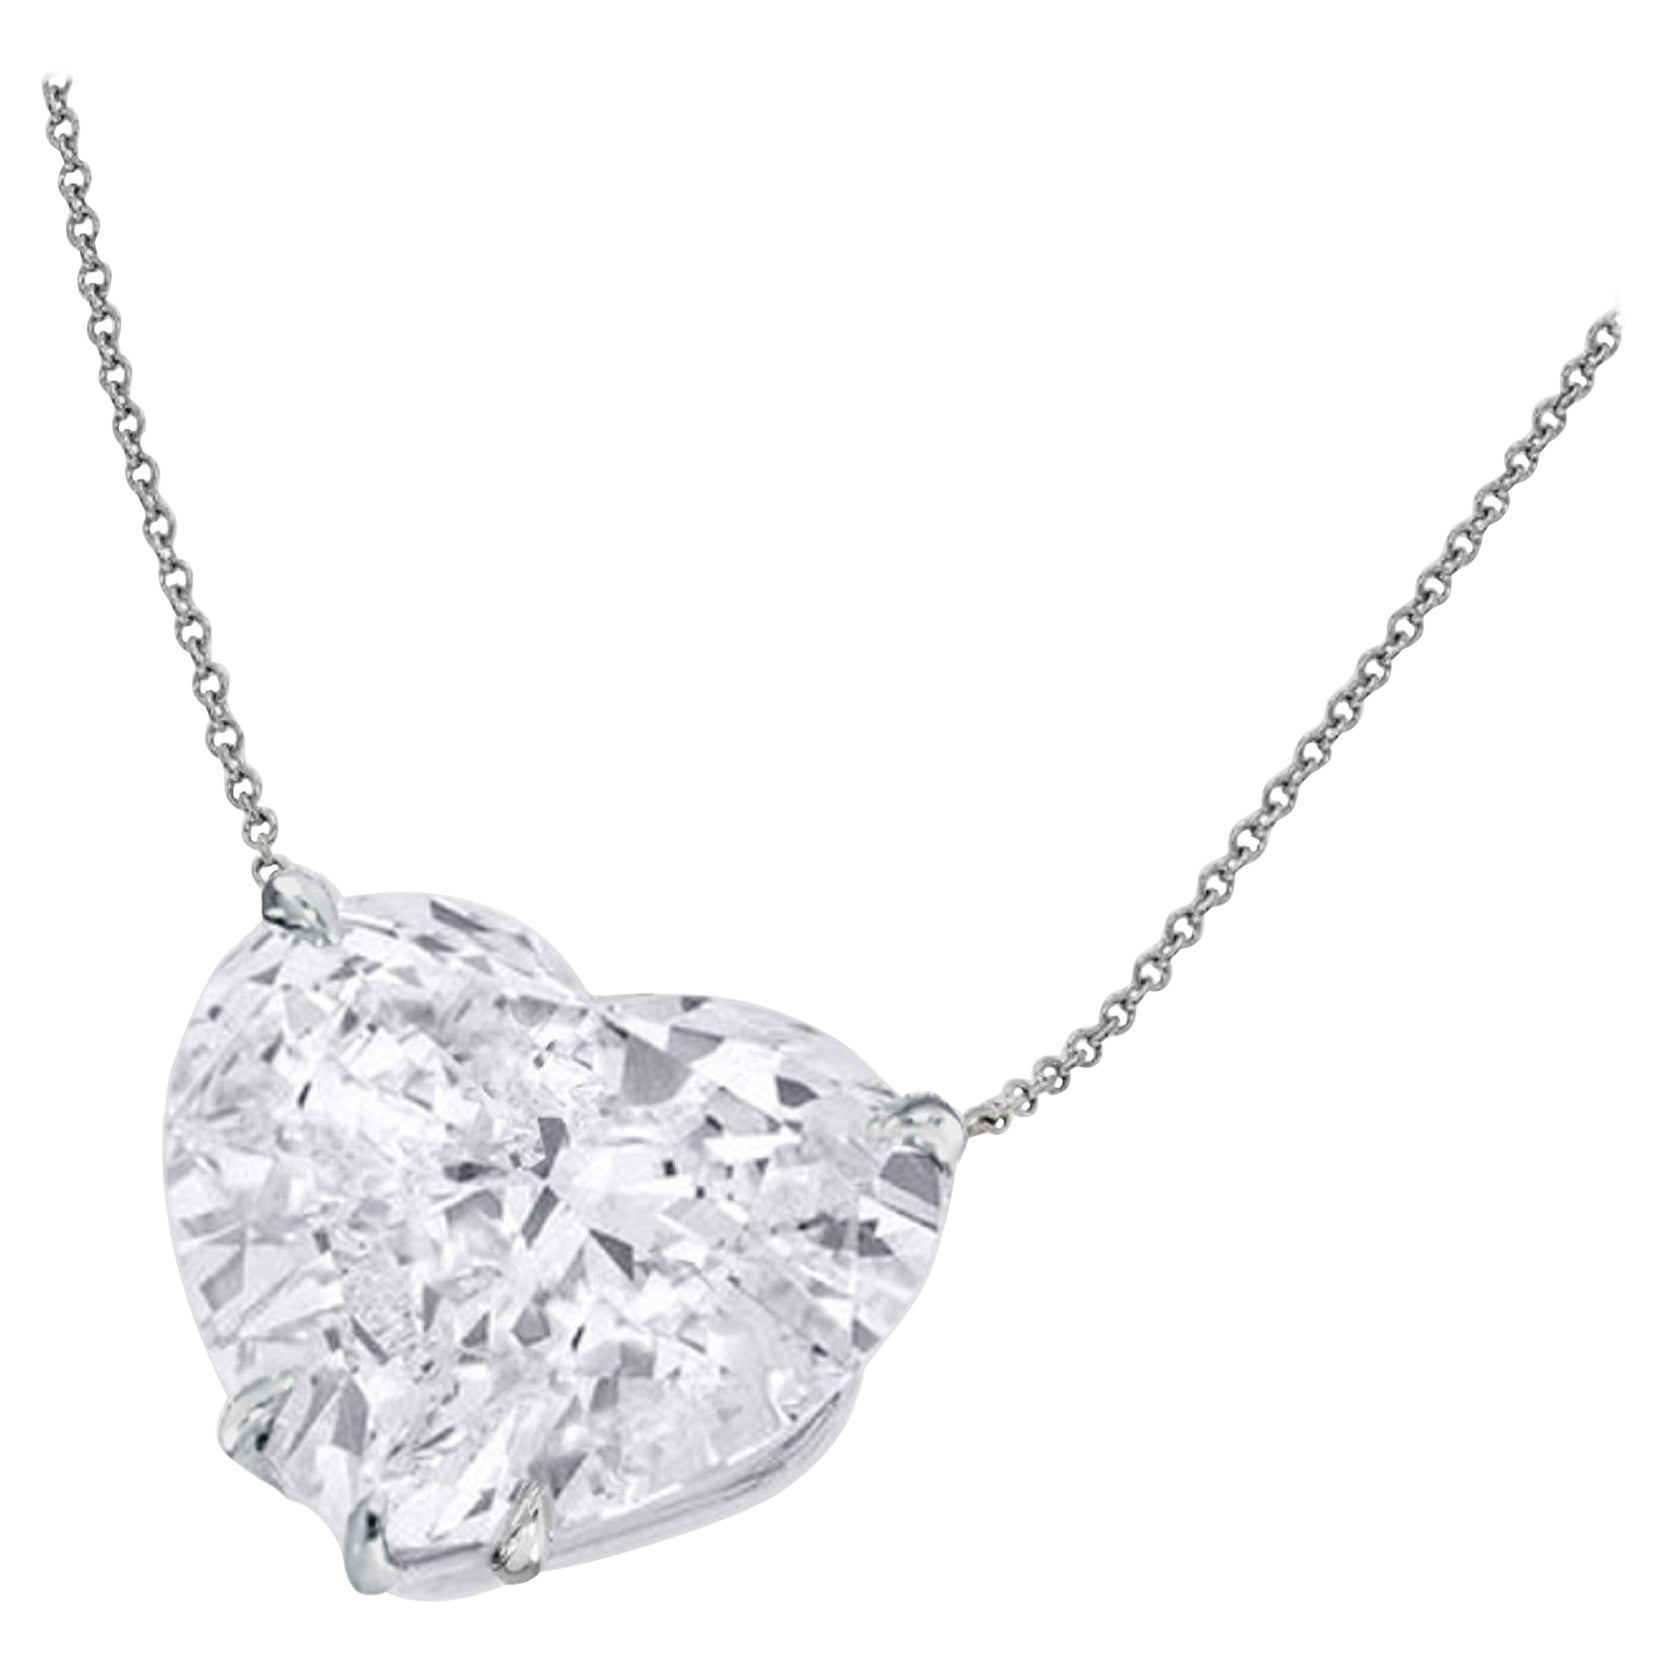 GIA Certified 3.33 Carat Heart Shape Diamond Platinum Necklace D COLOR FLAWLESS